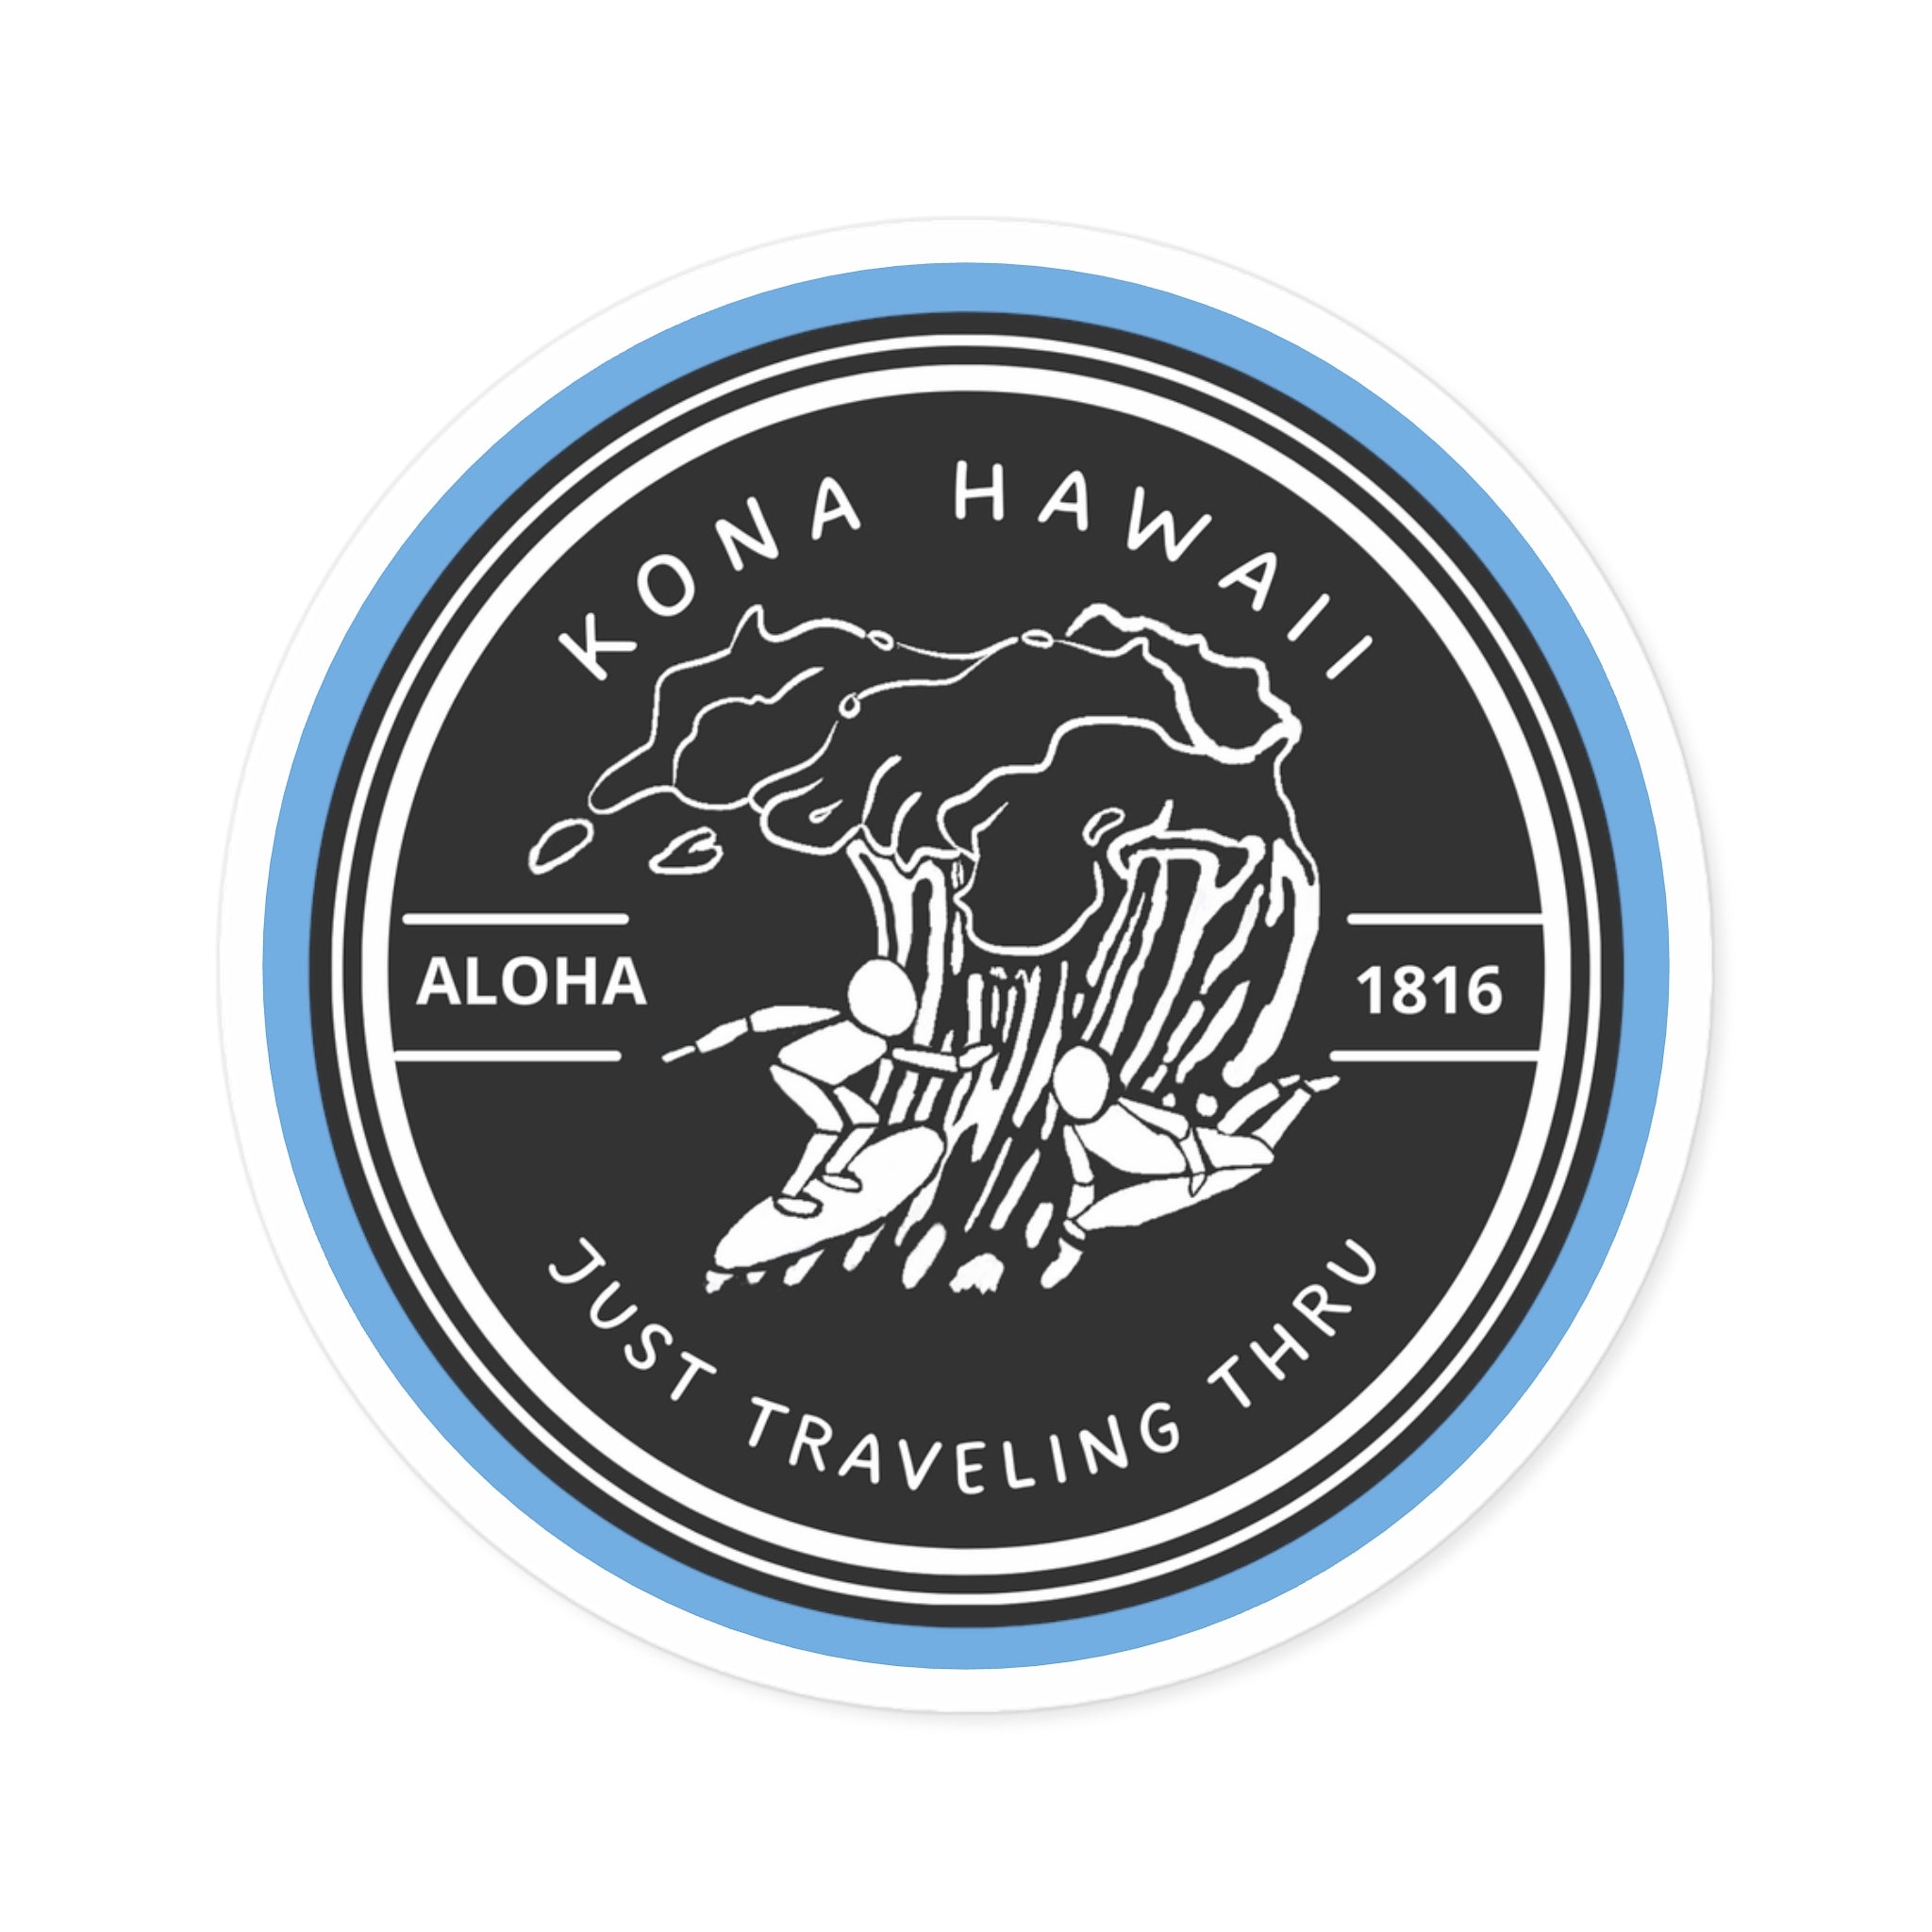 🏄‍♂️🏄‍♀️ "Kona Hawaii Surfing Adventure Sticker - Just Traveling Thru, Aloha, 1816" 🌺🚐